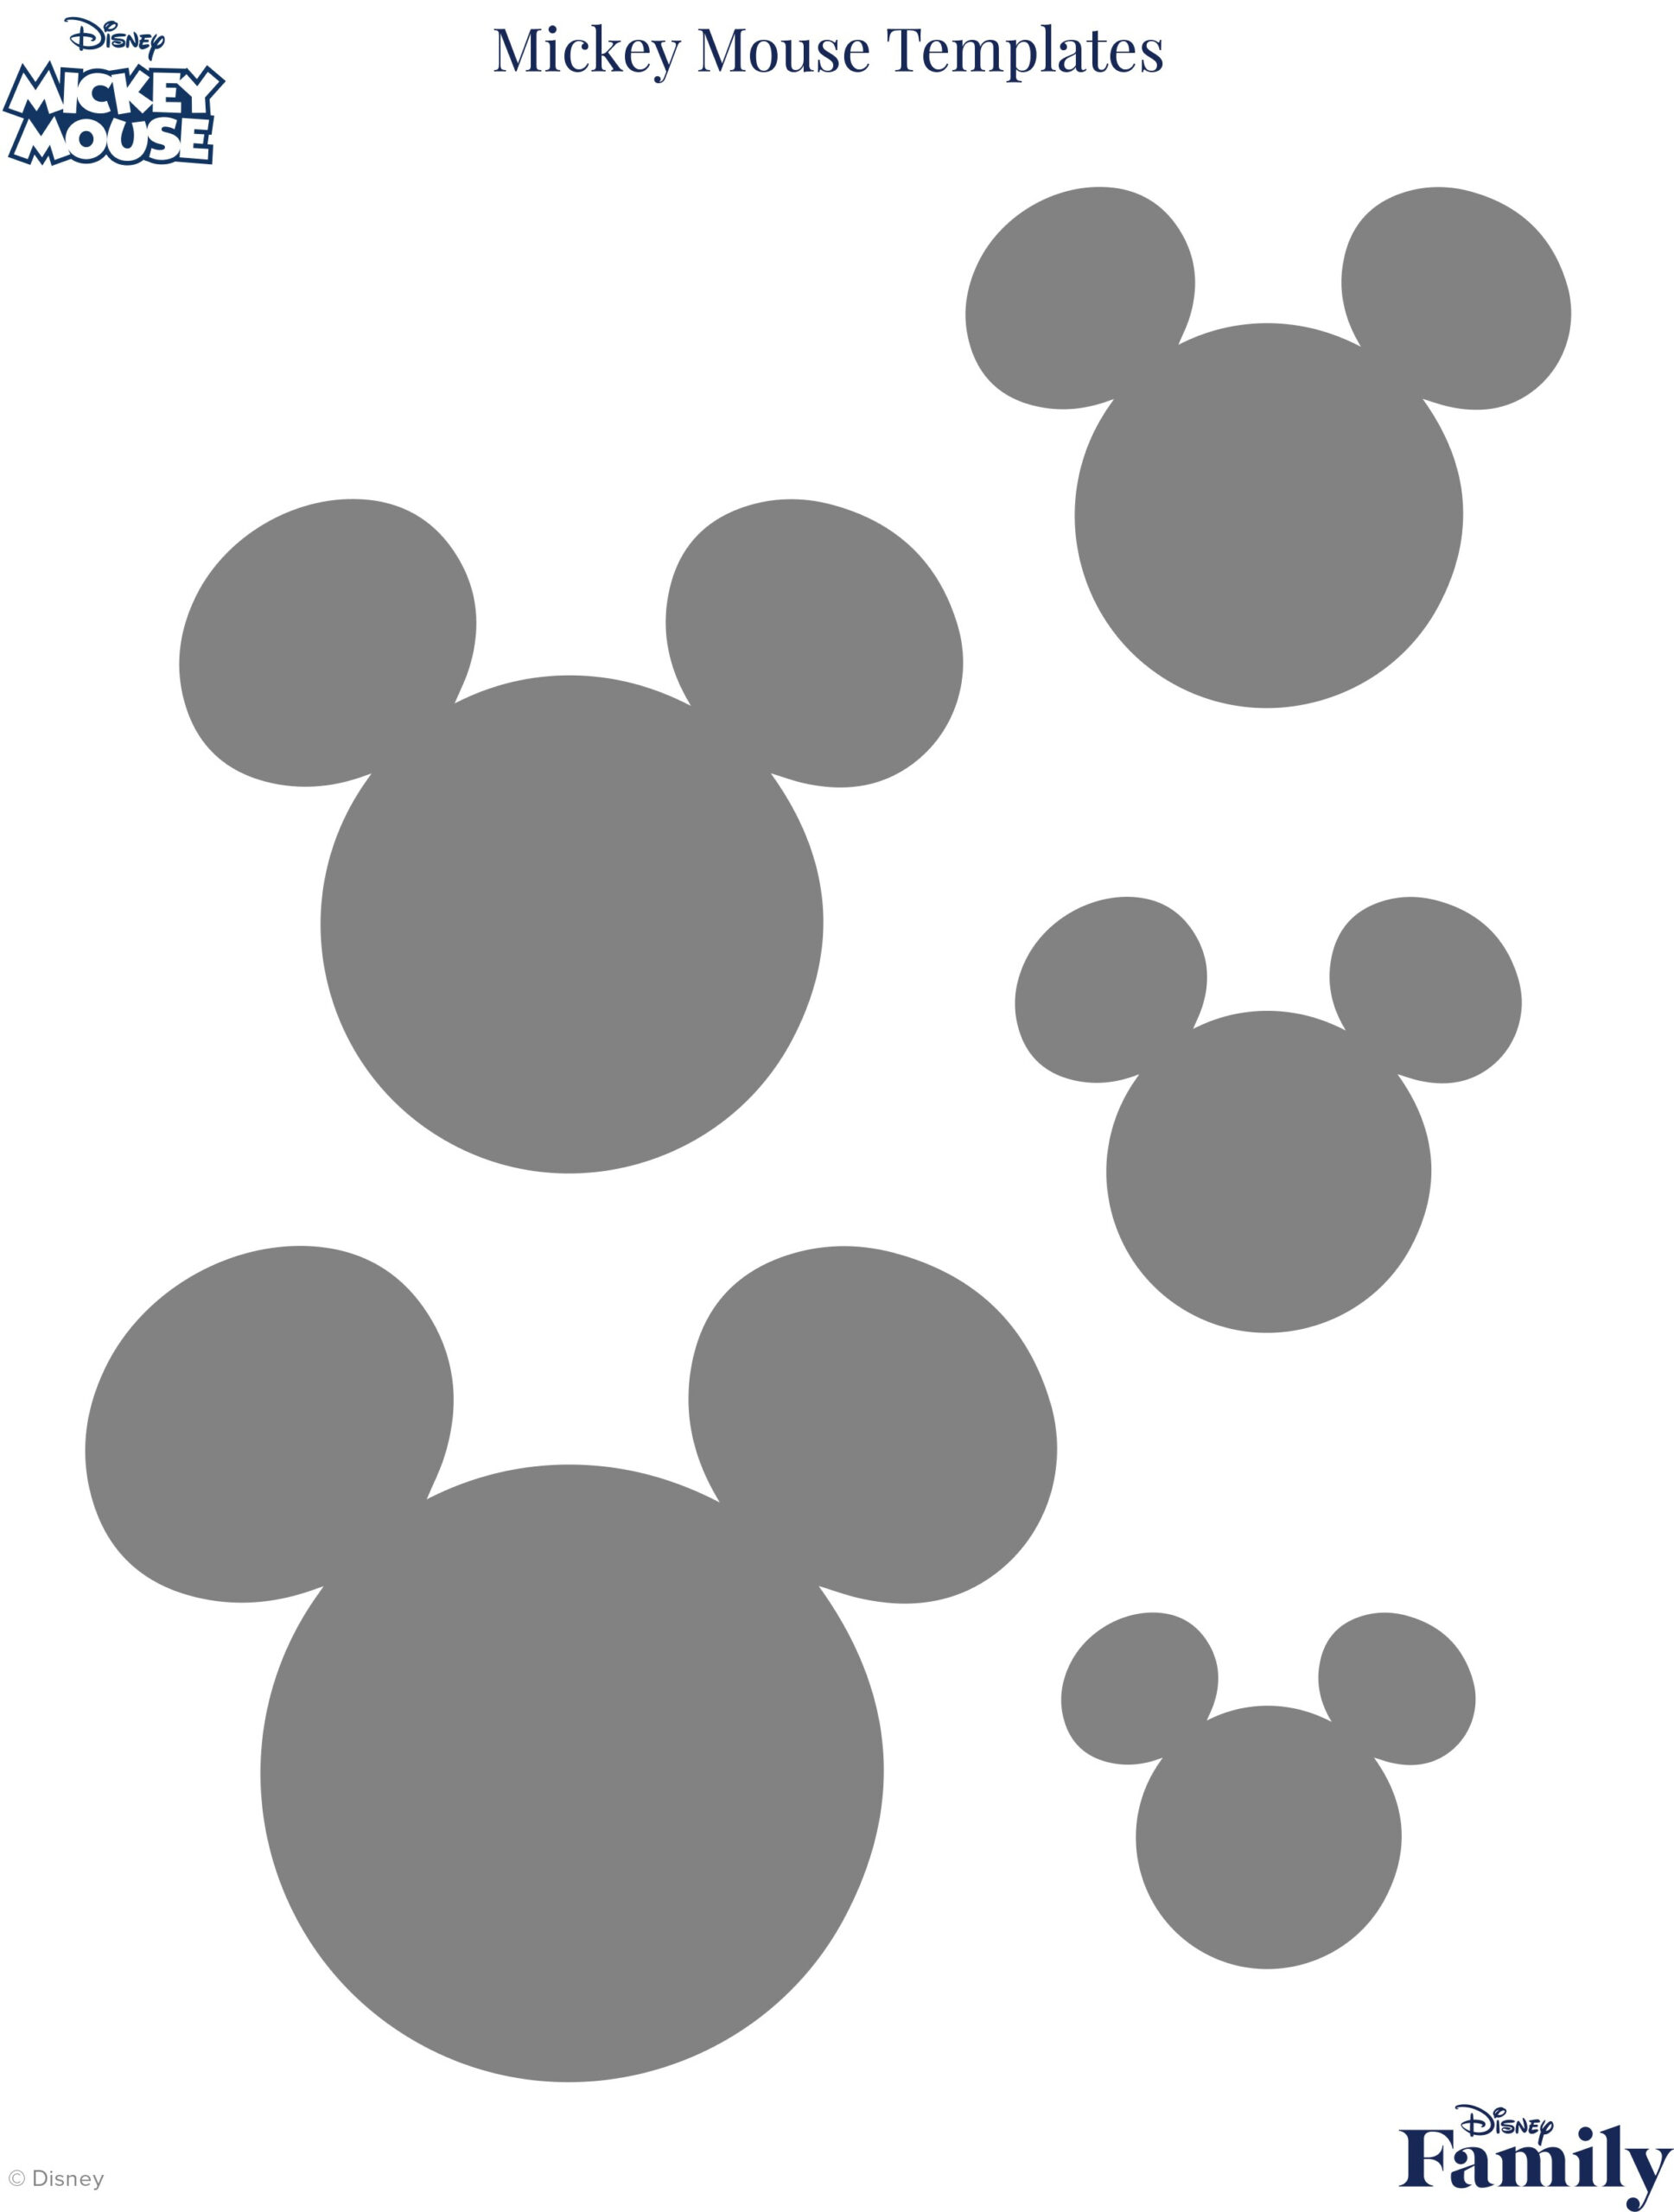 Mickey Mouse Template | Disney News regarding Free Printable Mickey Mouse Template